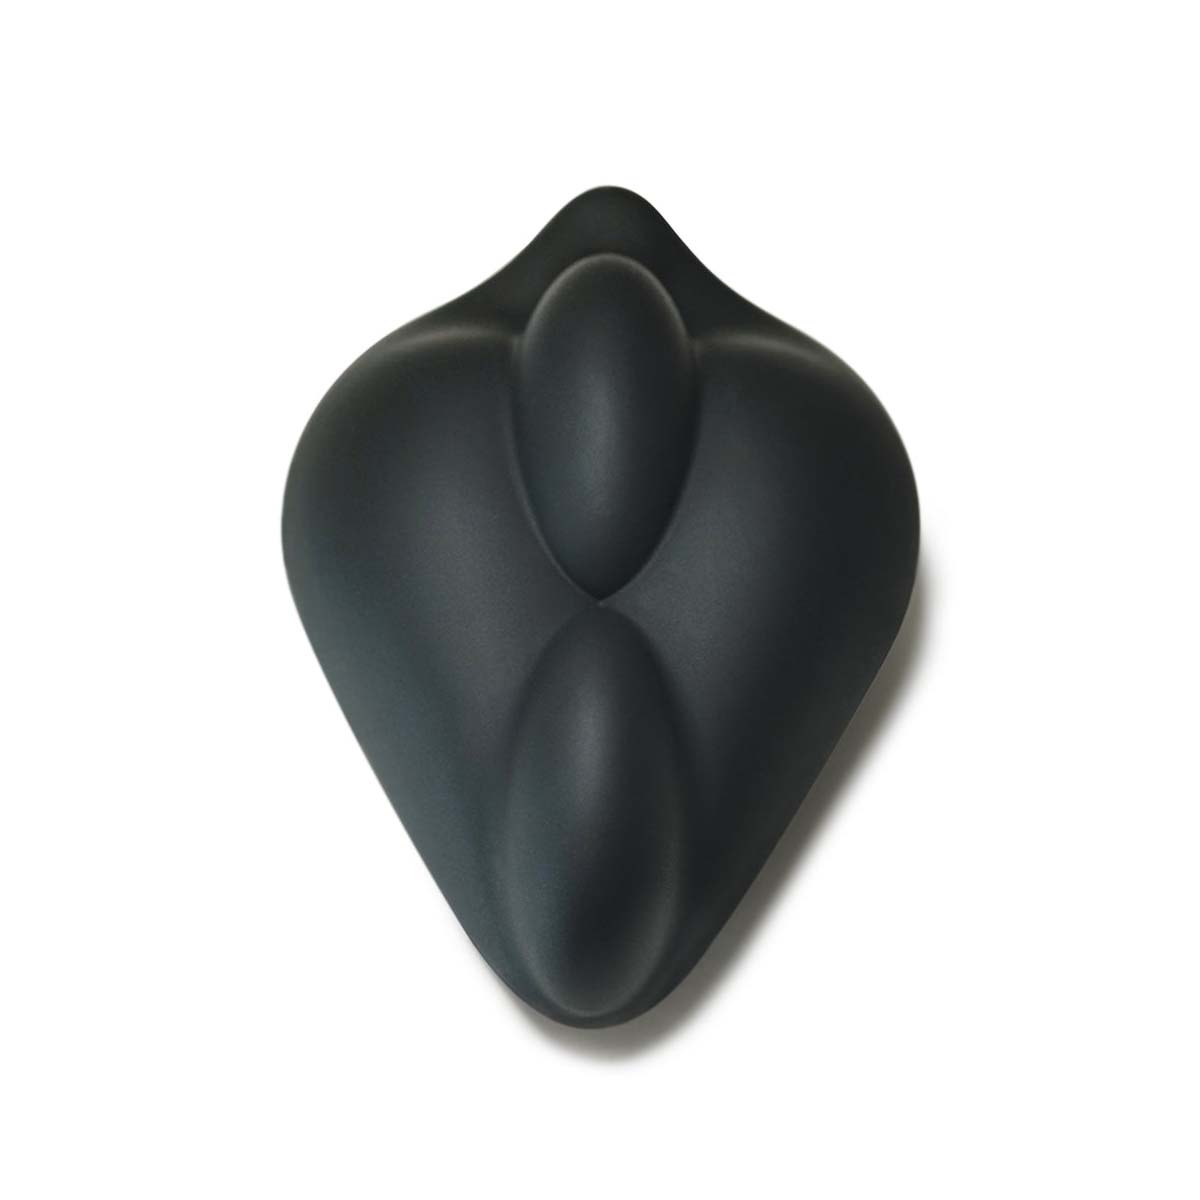 Black silicone stimulation cushion for dildo Nudie Co